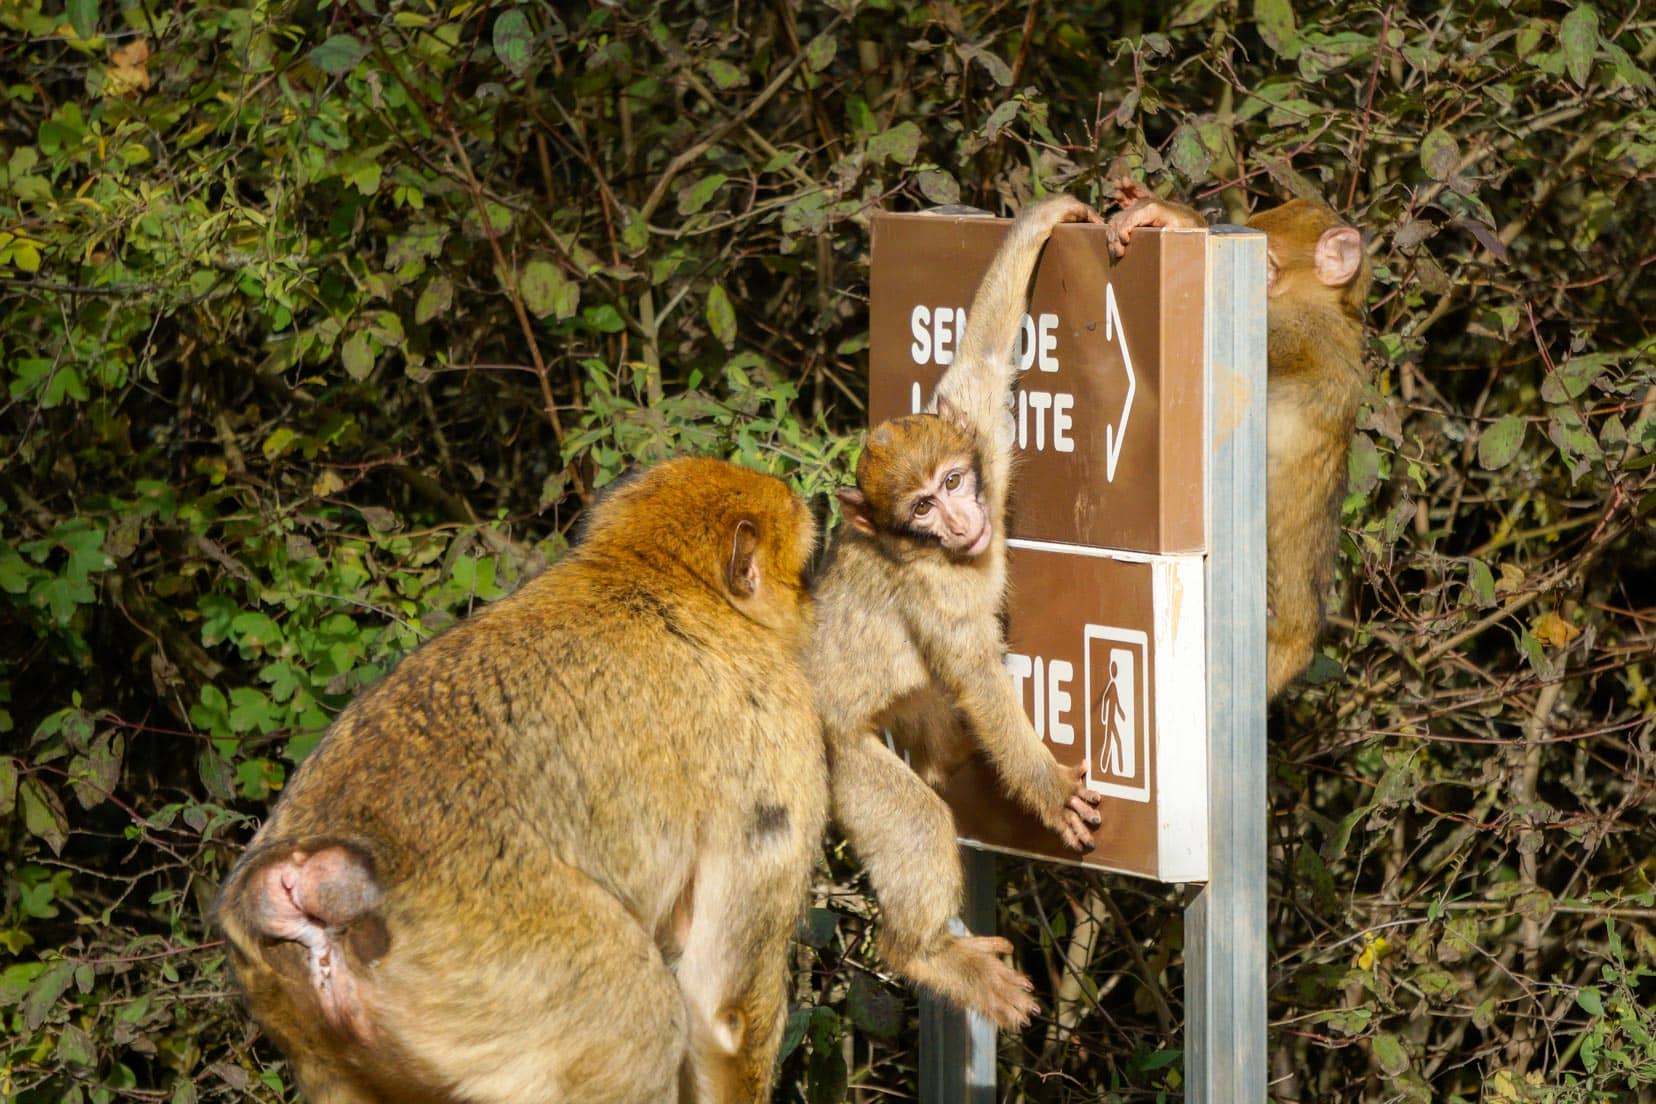 mum-and-2-baby-monkeys-at-sign